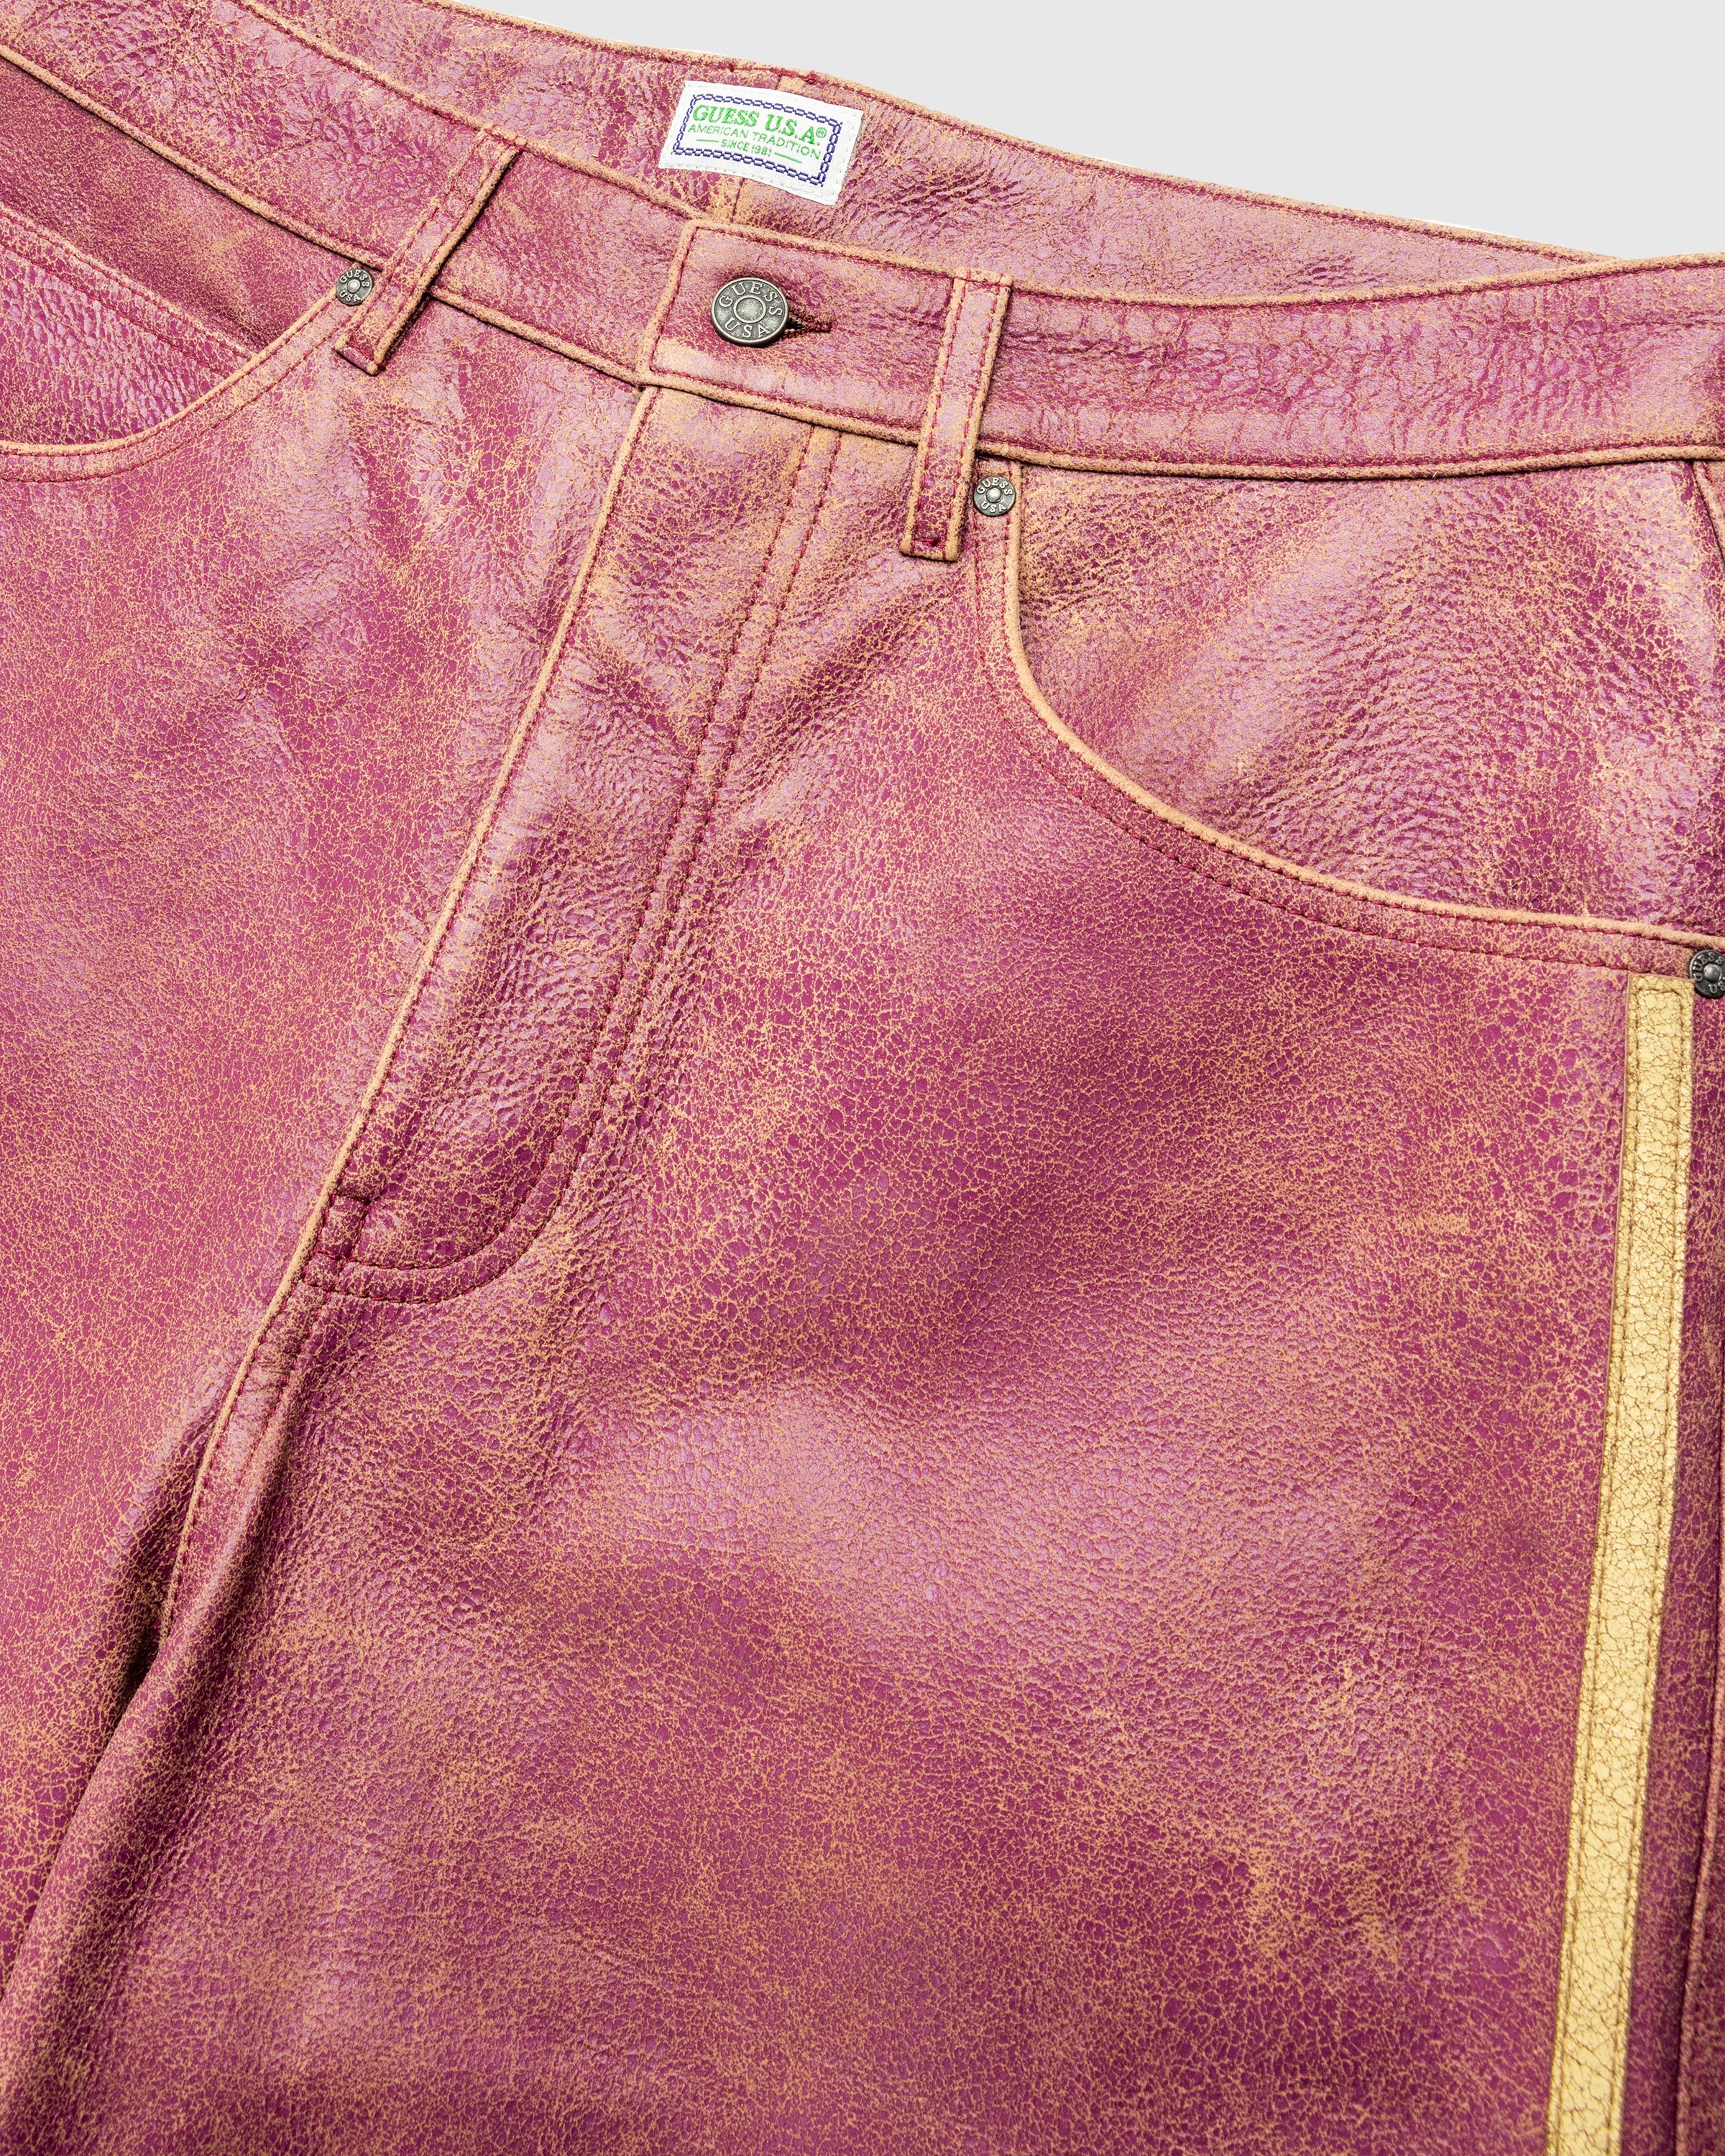 Guess USA - Gusa Crackle Leather Short Distressed Damson Mu - Clothing - Multi - Image 6